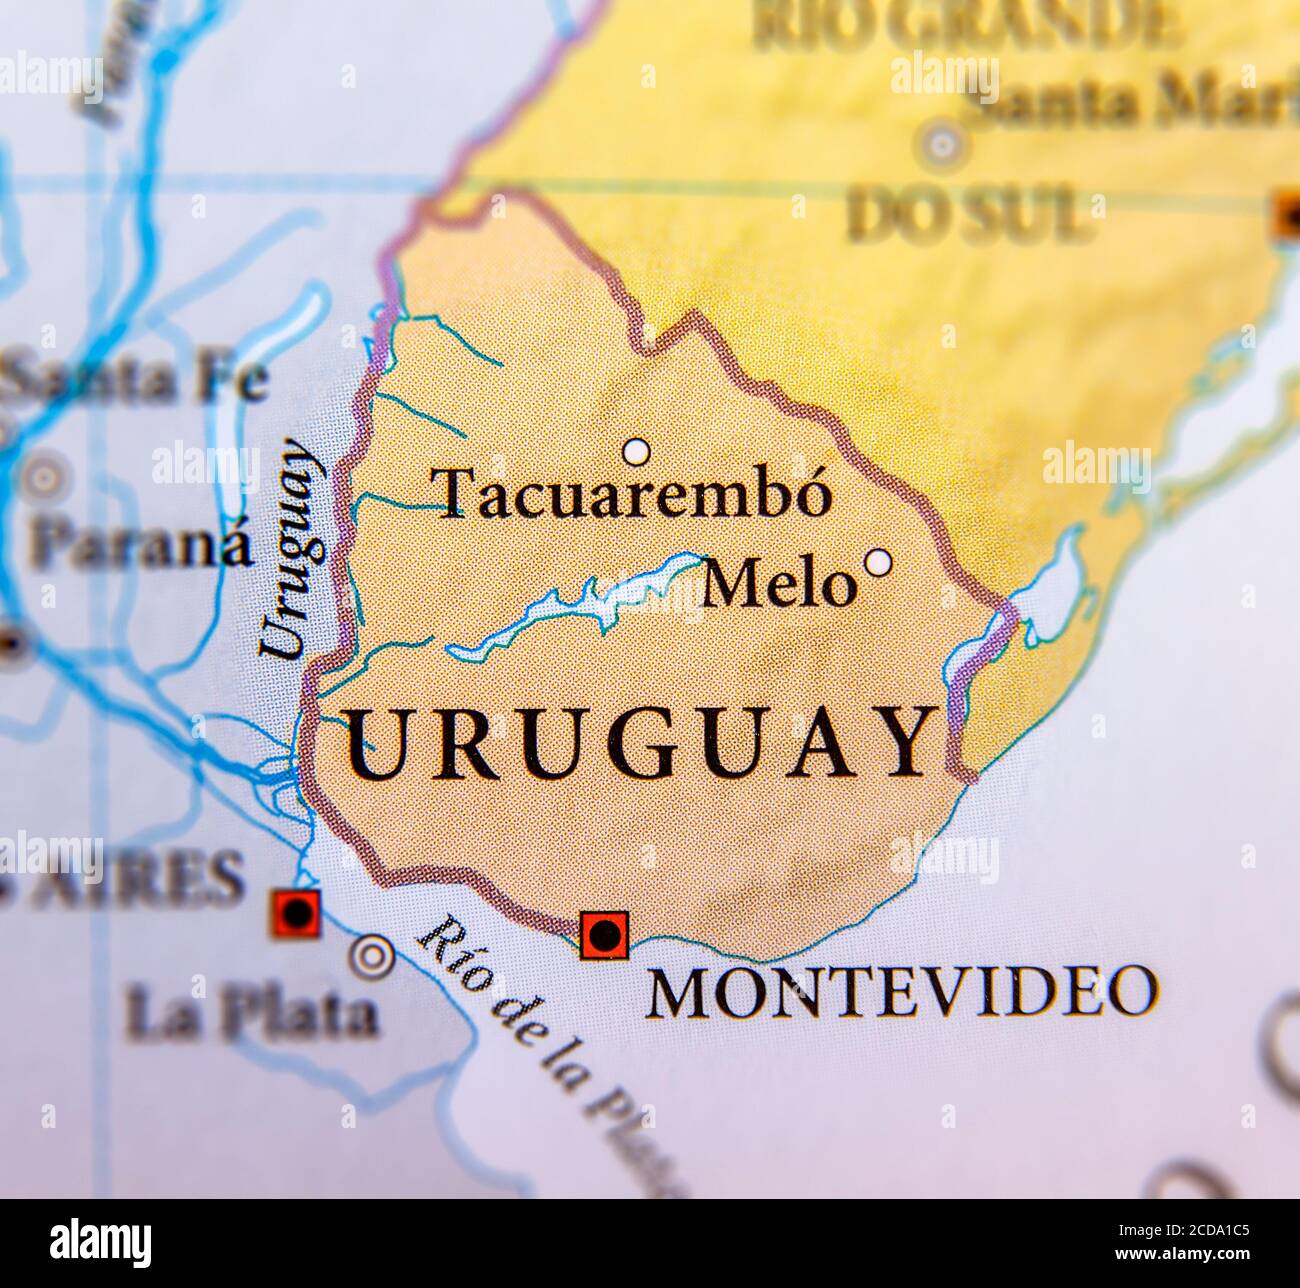 Уругвай столица на карте. Столица Уругвая на карте. Уругвай географическое положение страны. Уругвай географическое положение. Уругвай на карте.